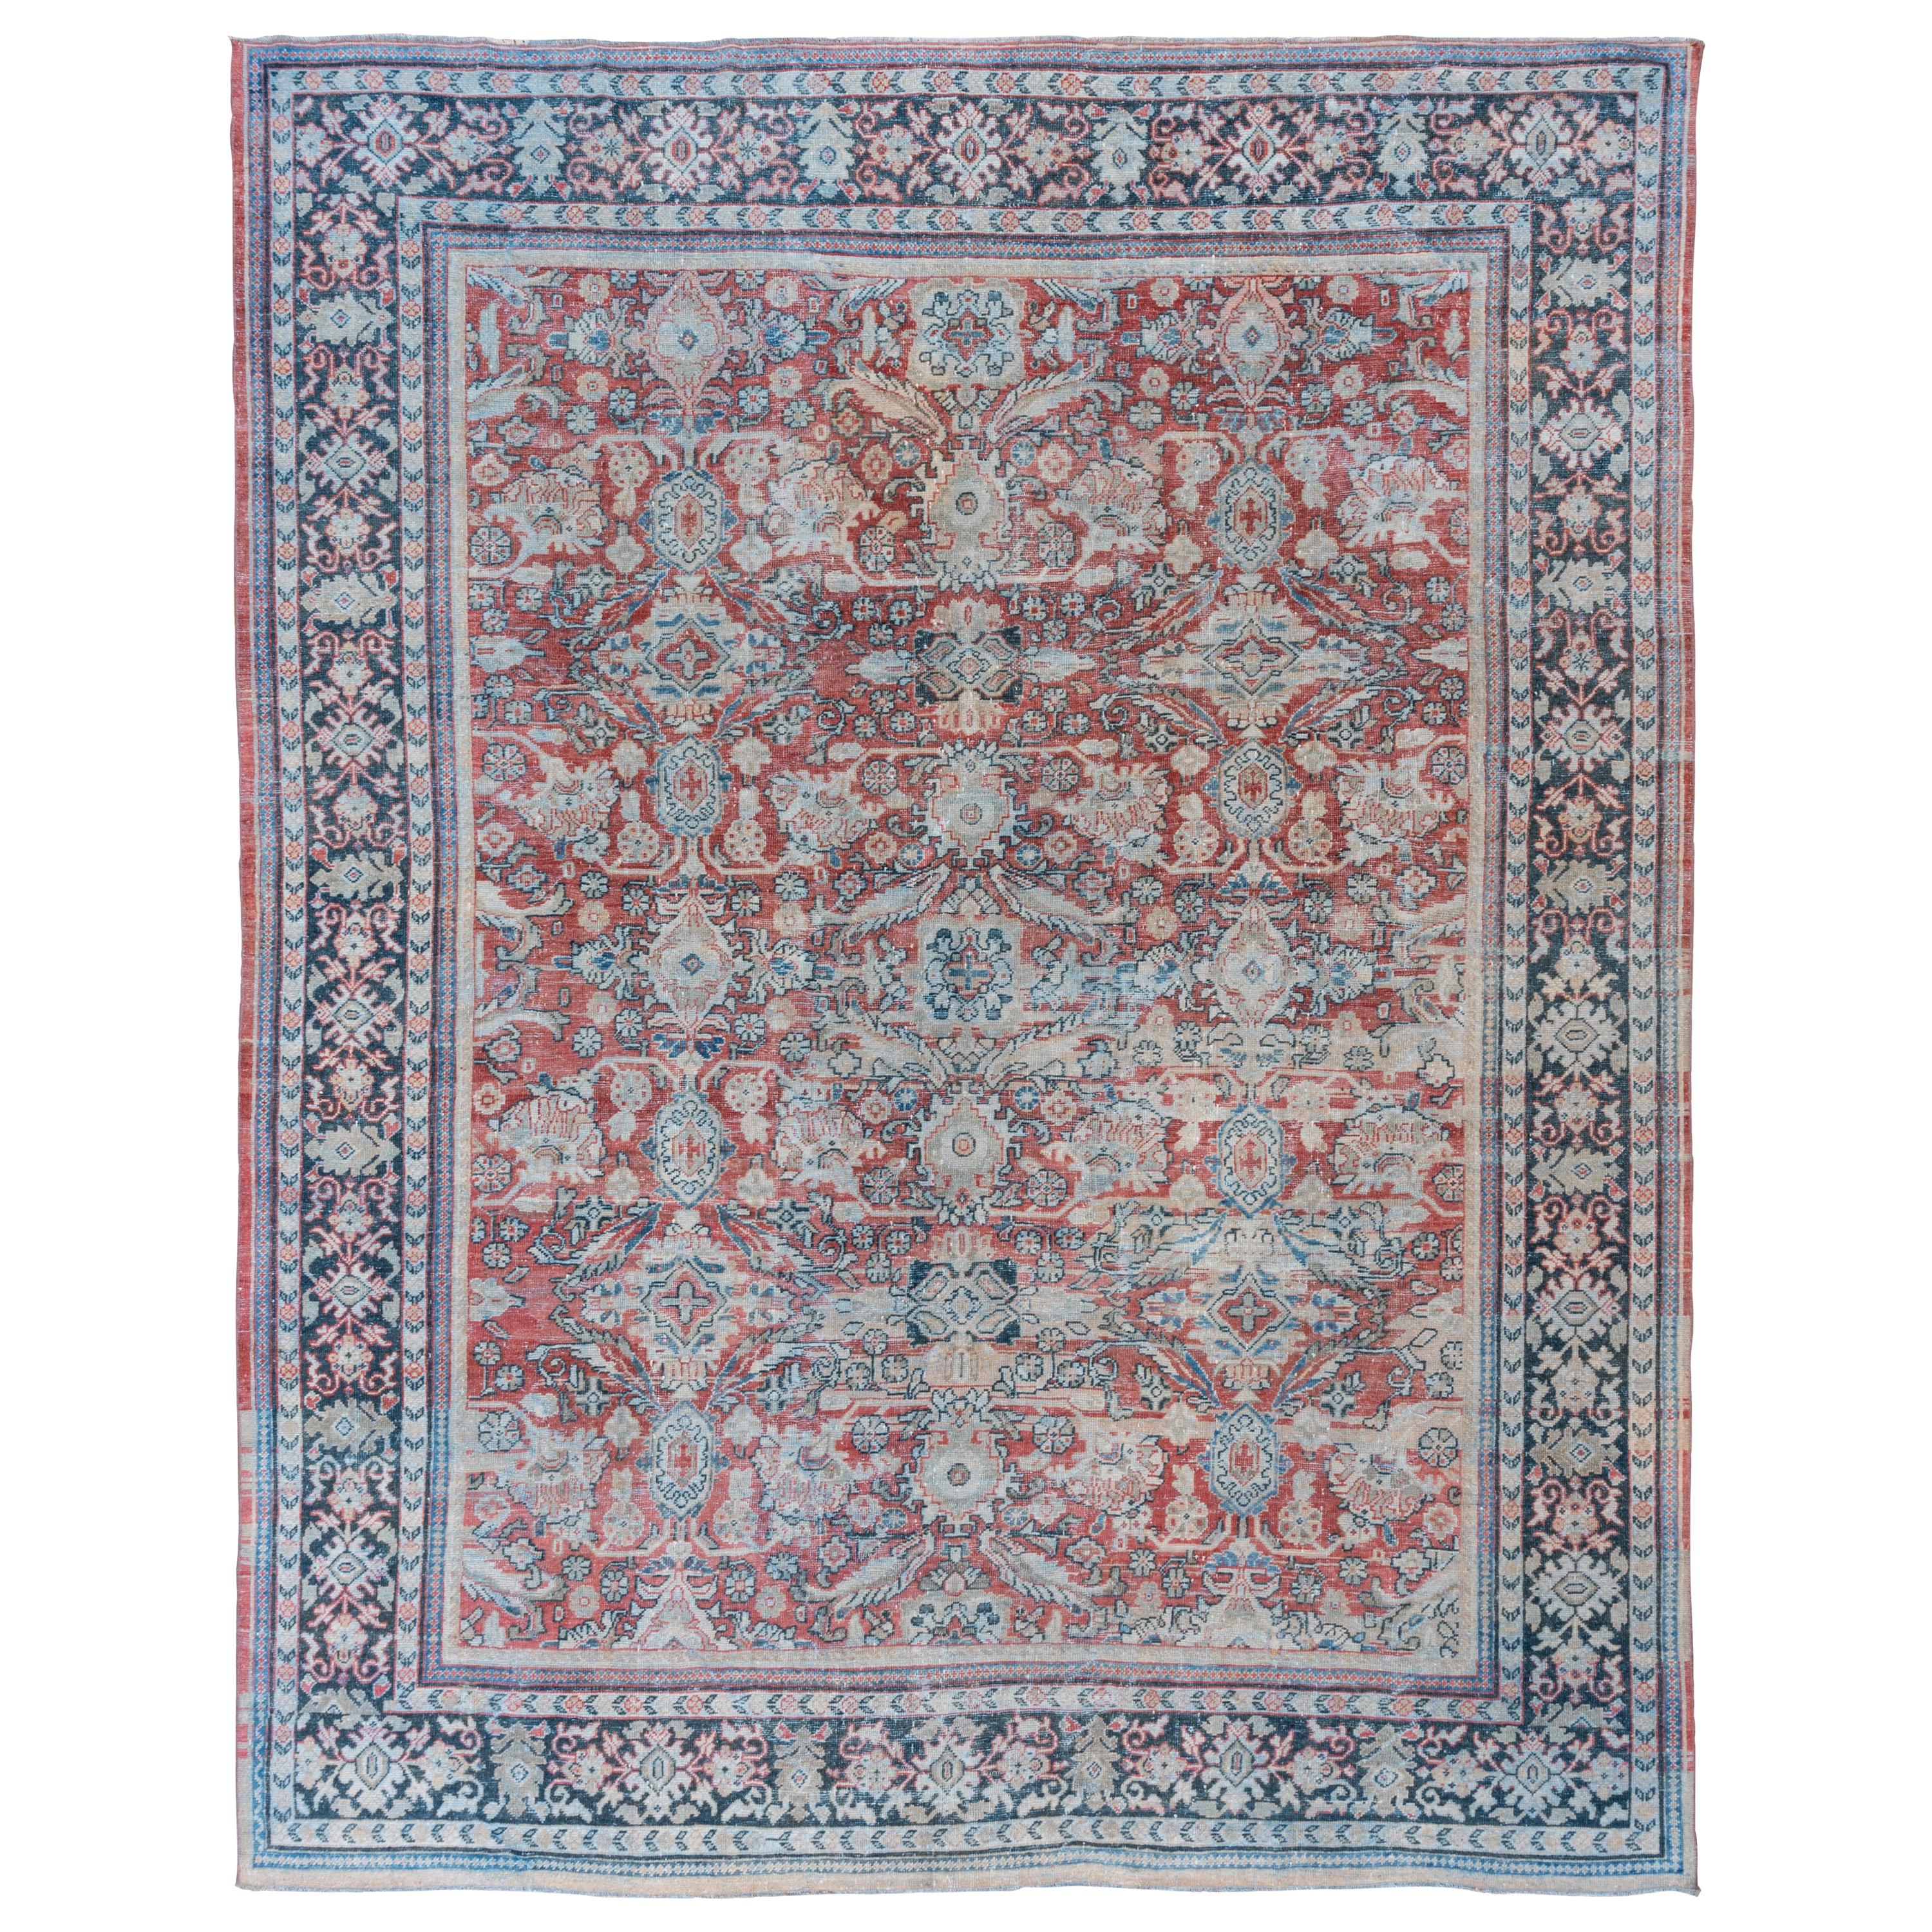 Leichter antiker roter persischer Mahal-Teppich im Used-Look, blaue Bordüren, All-Over-Fuß